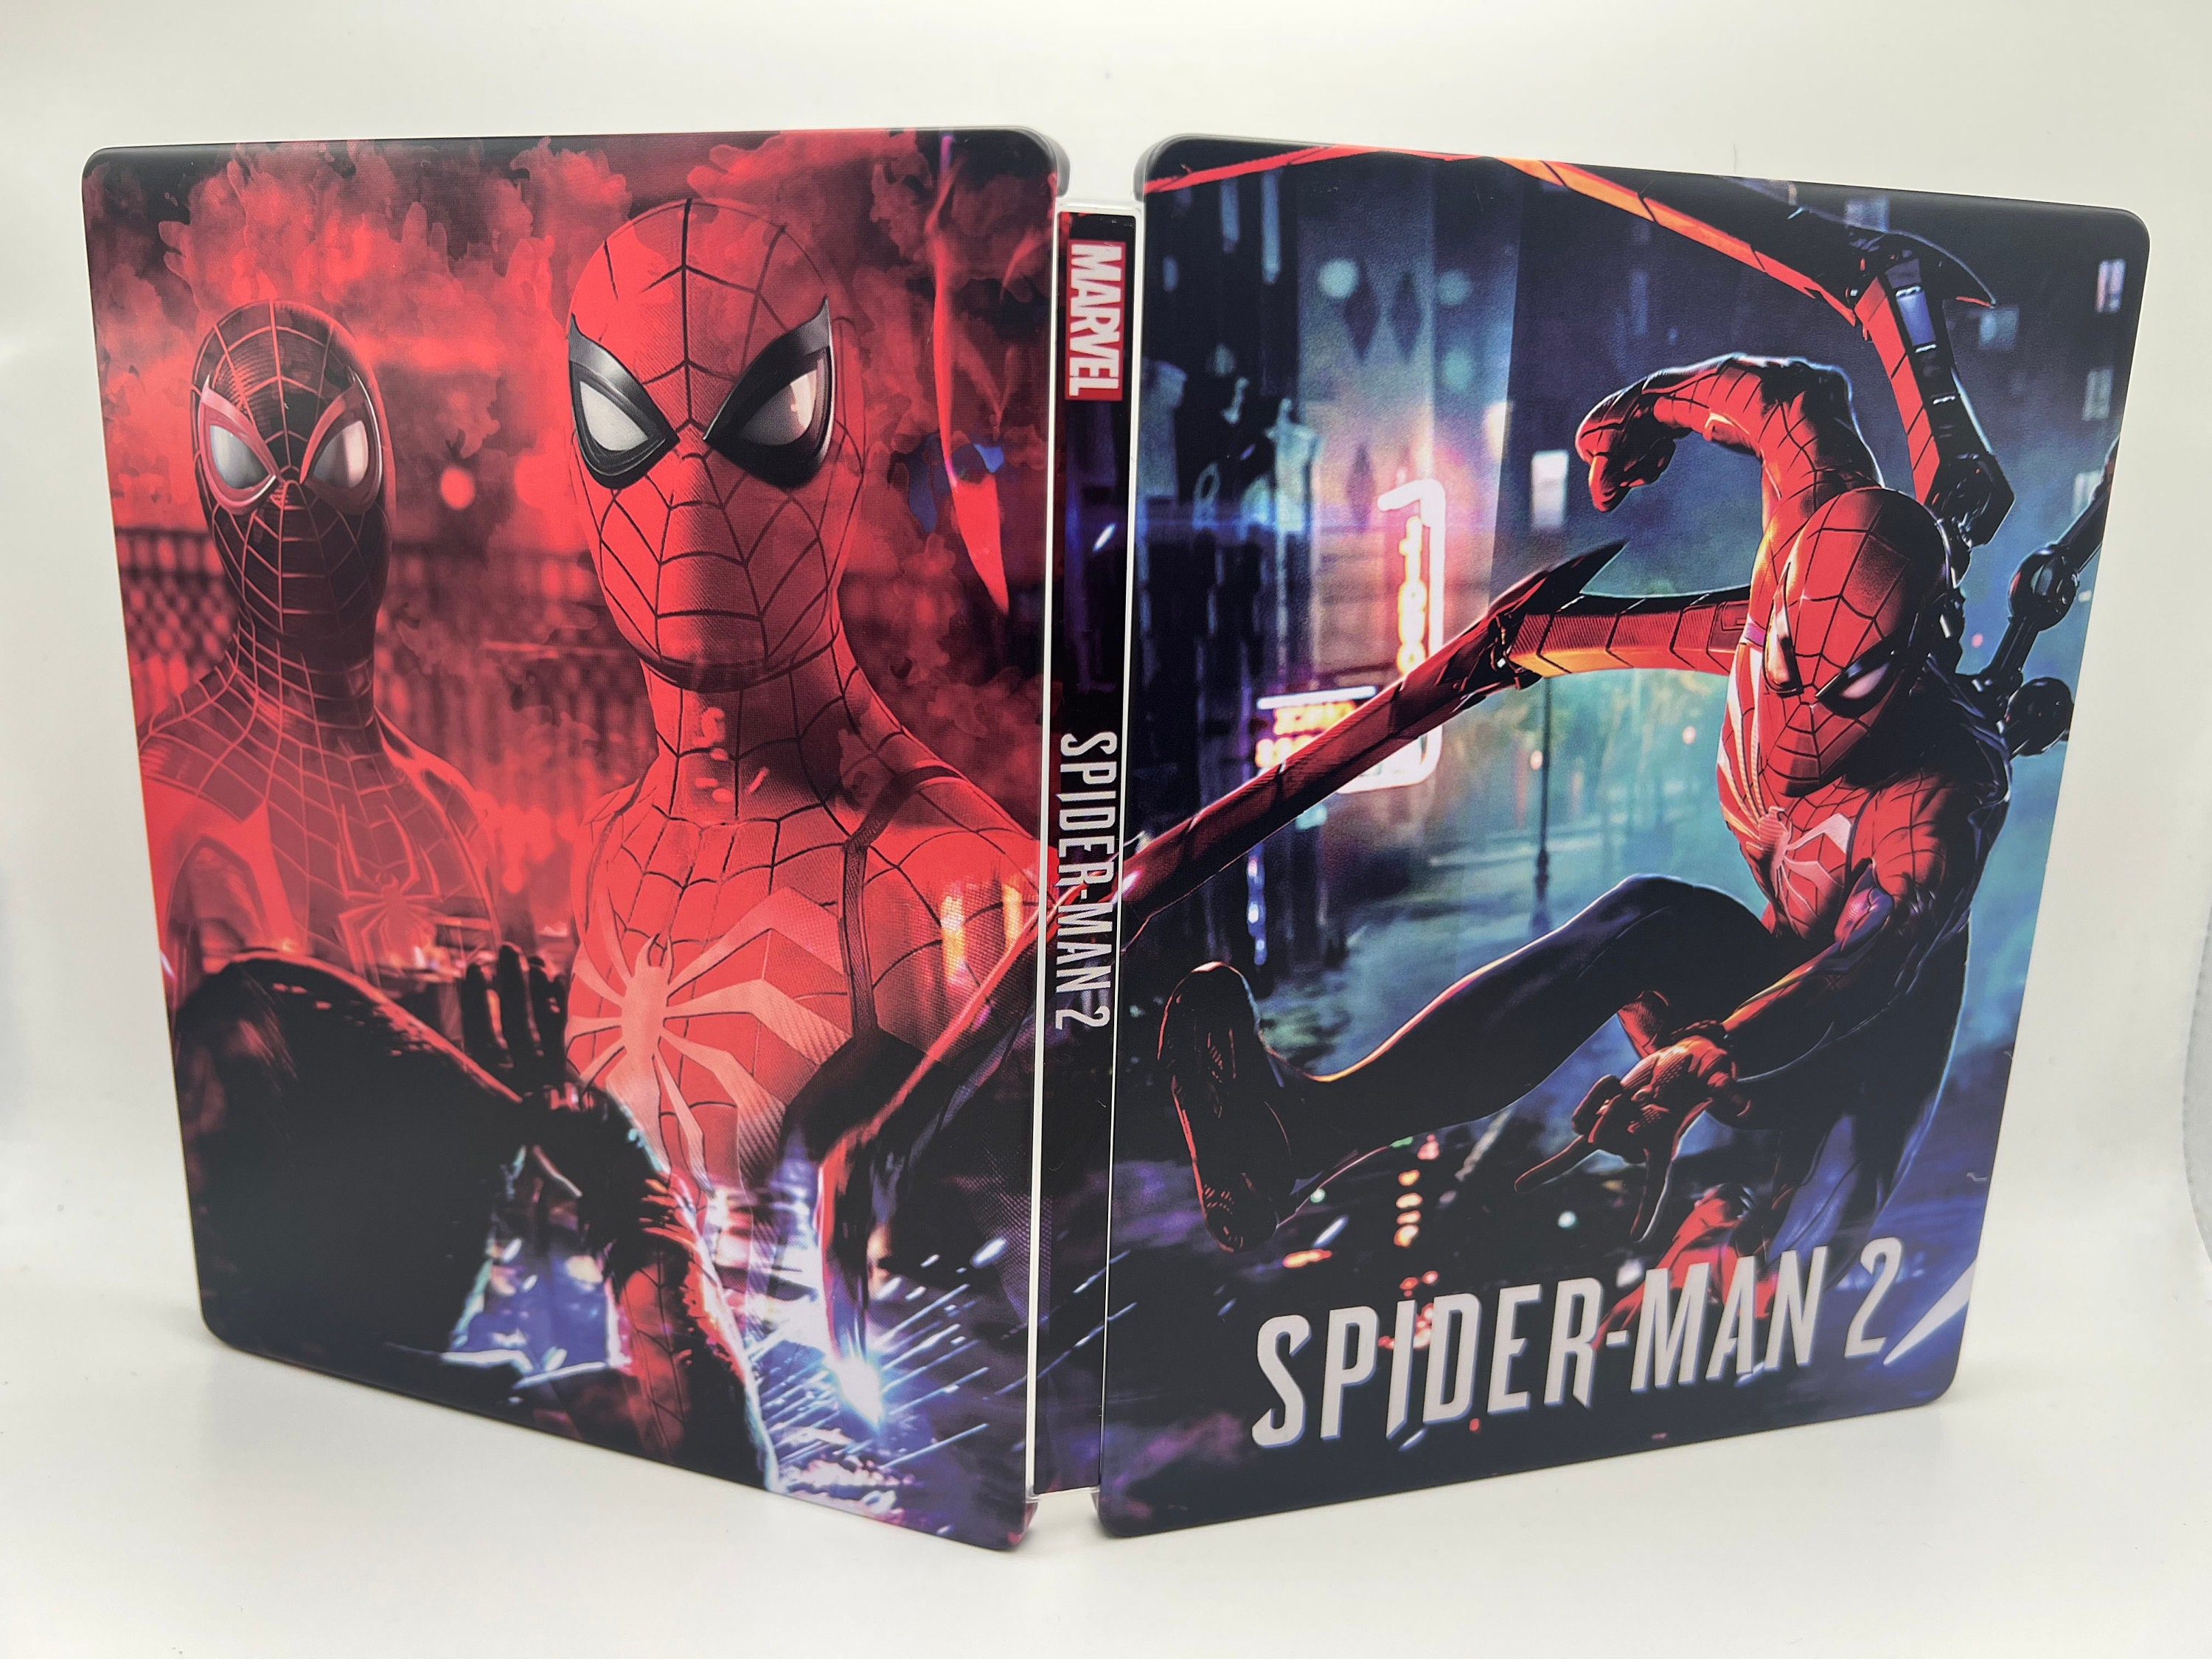 Marvel's Spider-Man Remastered Limited Edition Steelbook